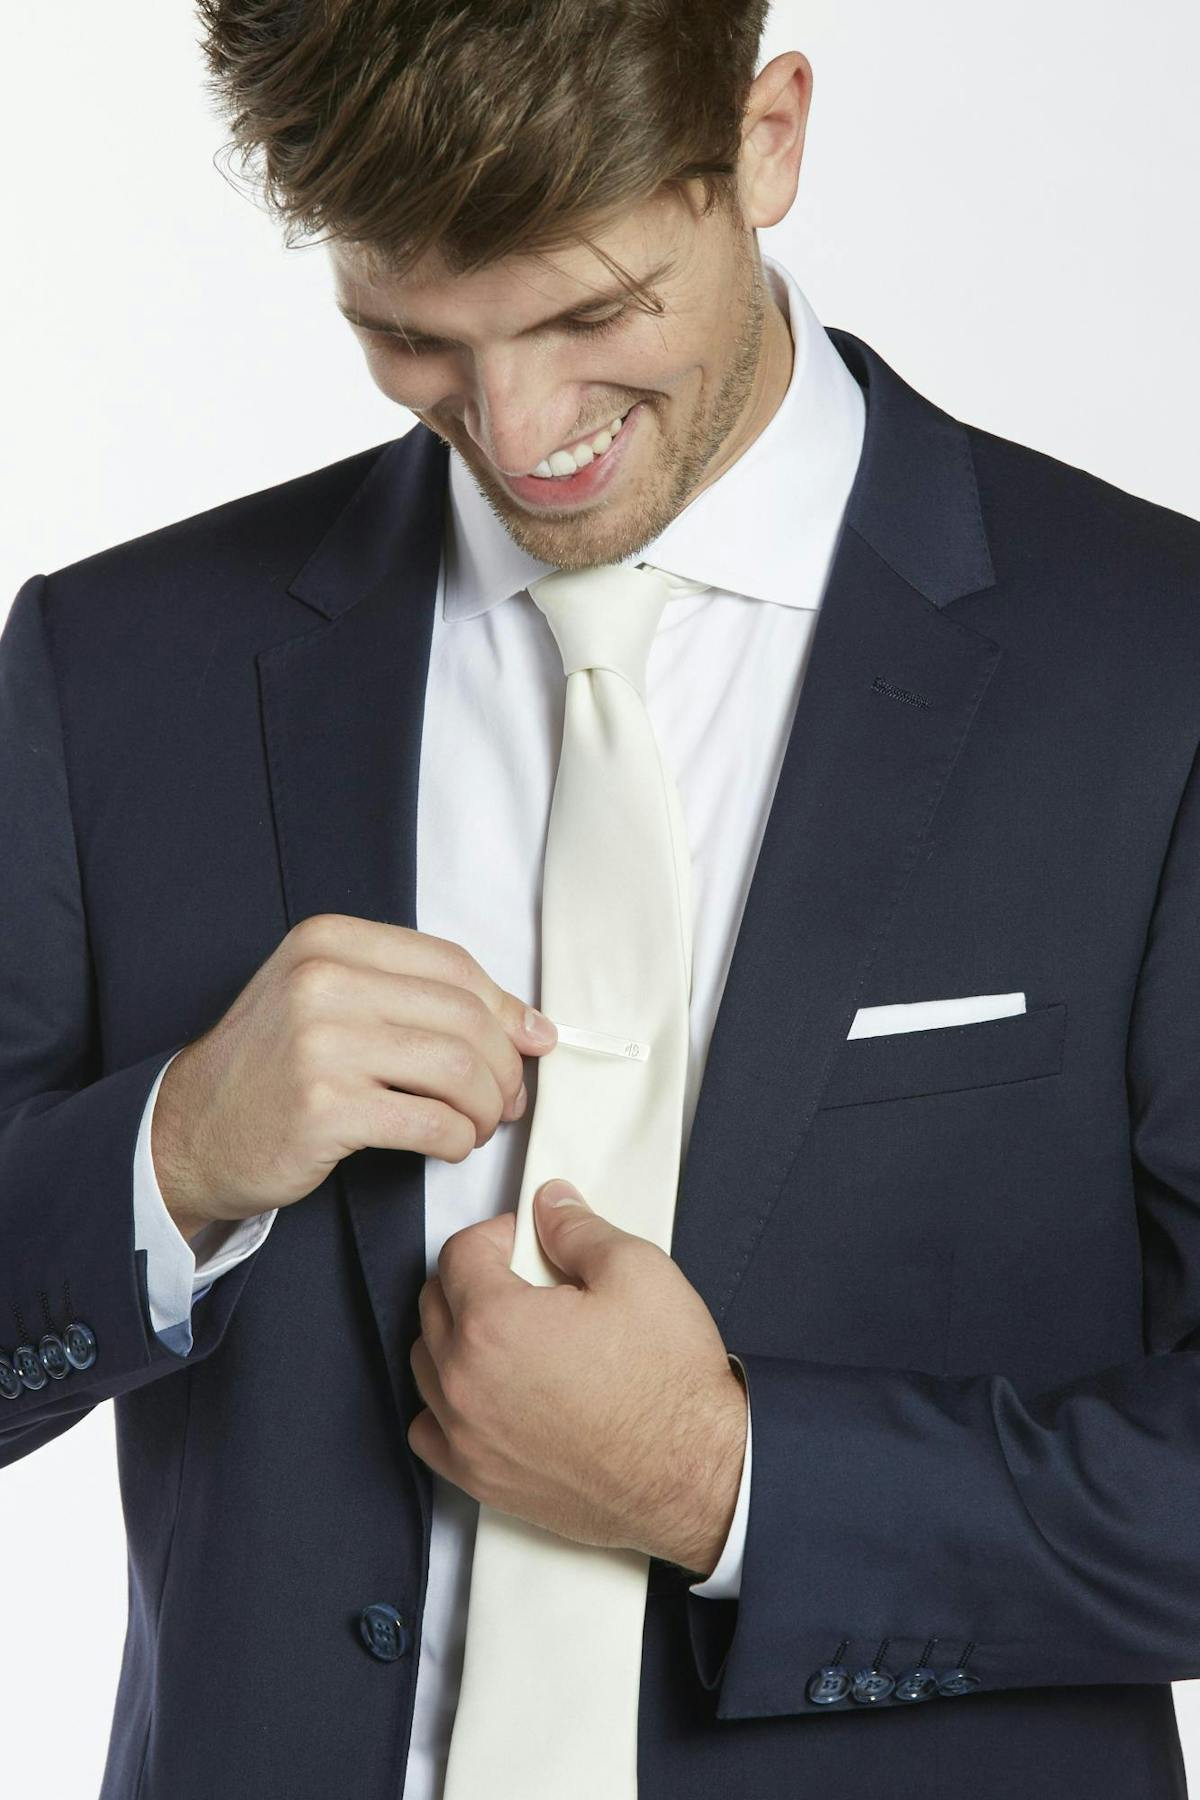 Men's wedding accessories_ how to wear tie bars with wedding suits_2